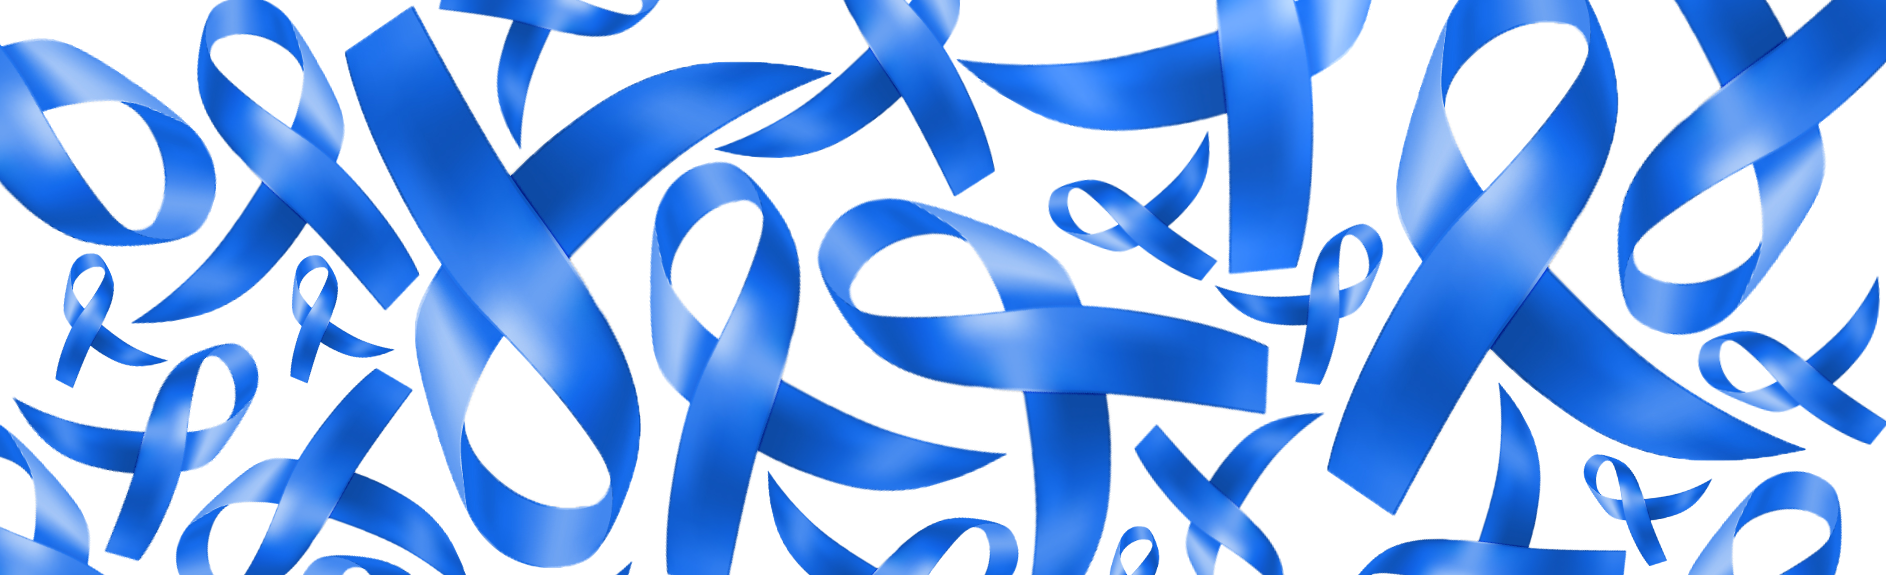 Royal blue colorectal cancer awareness ribbons